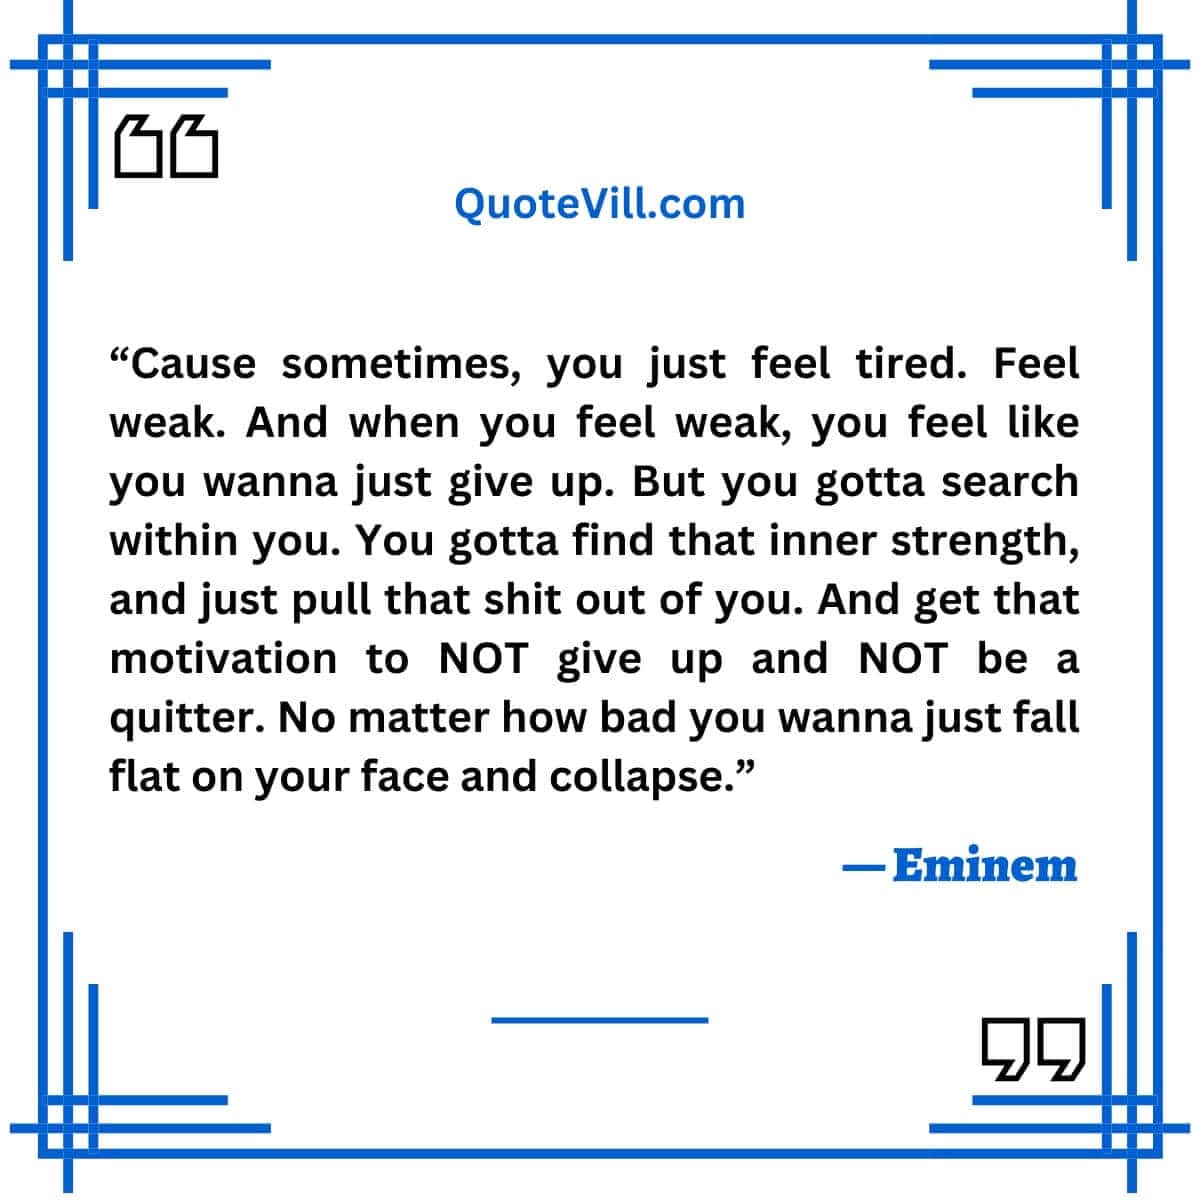 Eminem Quotes on Inspiration 